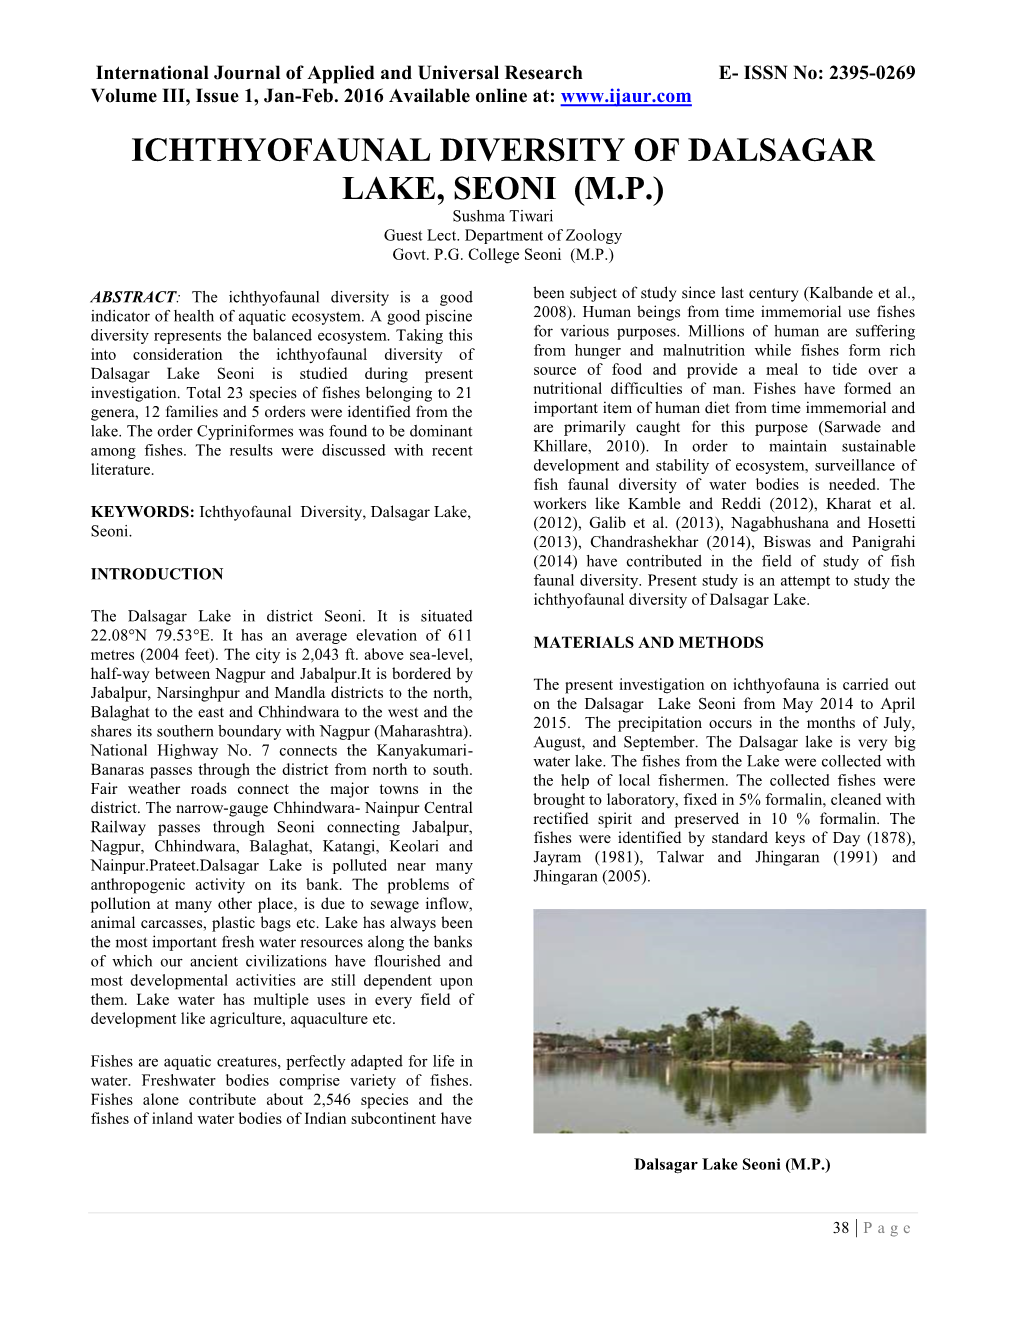 ICHTHYOFAUNAL DIVERSITY of DALSAGAR LAKE, SEONI (M.P.) Sushma Tiwari Guest Lect